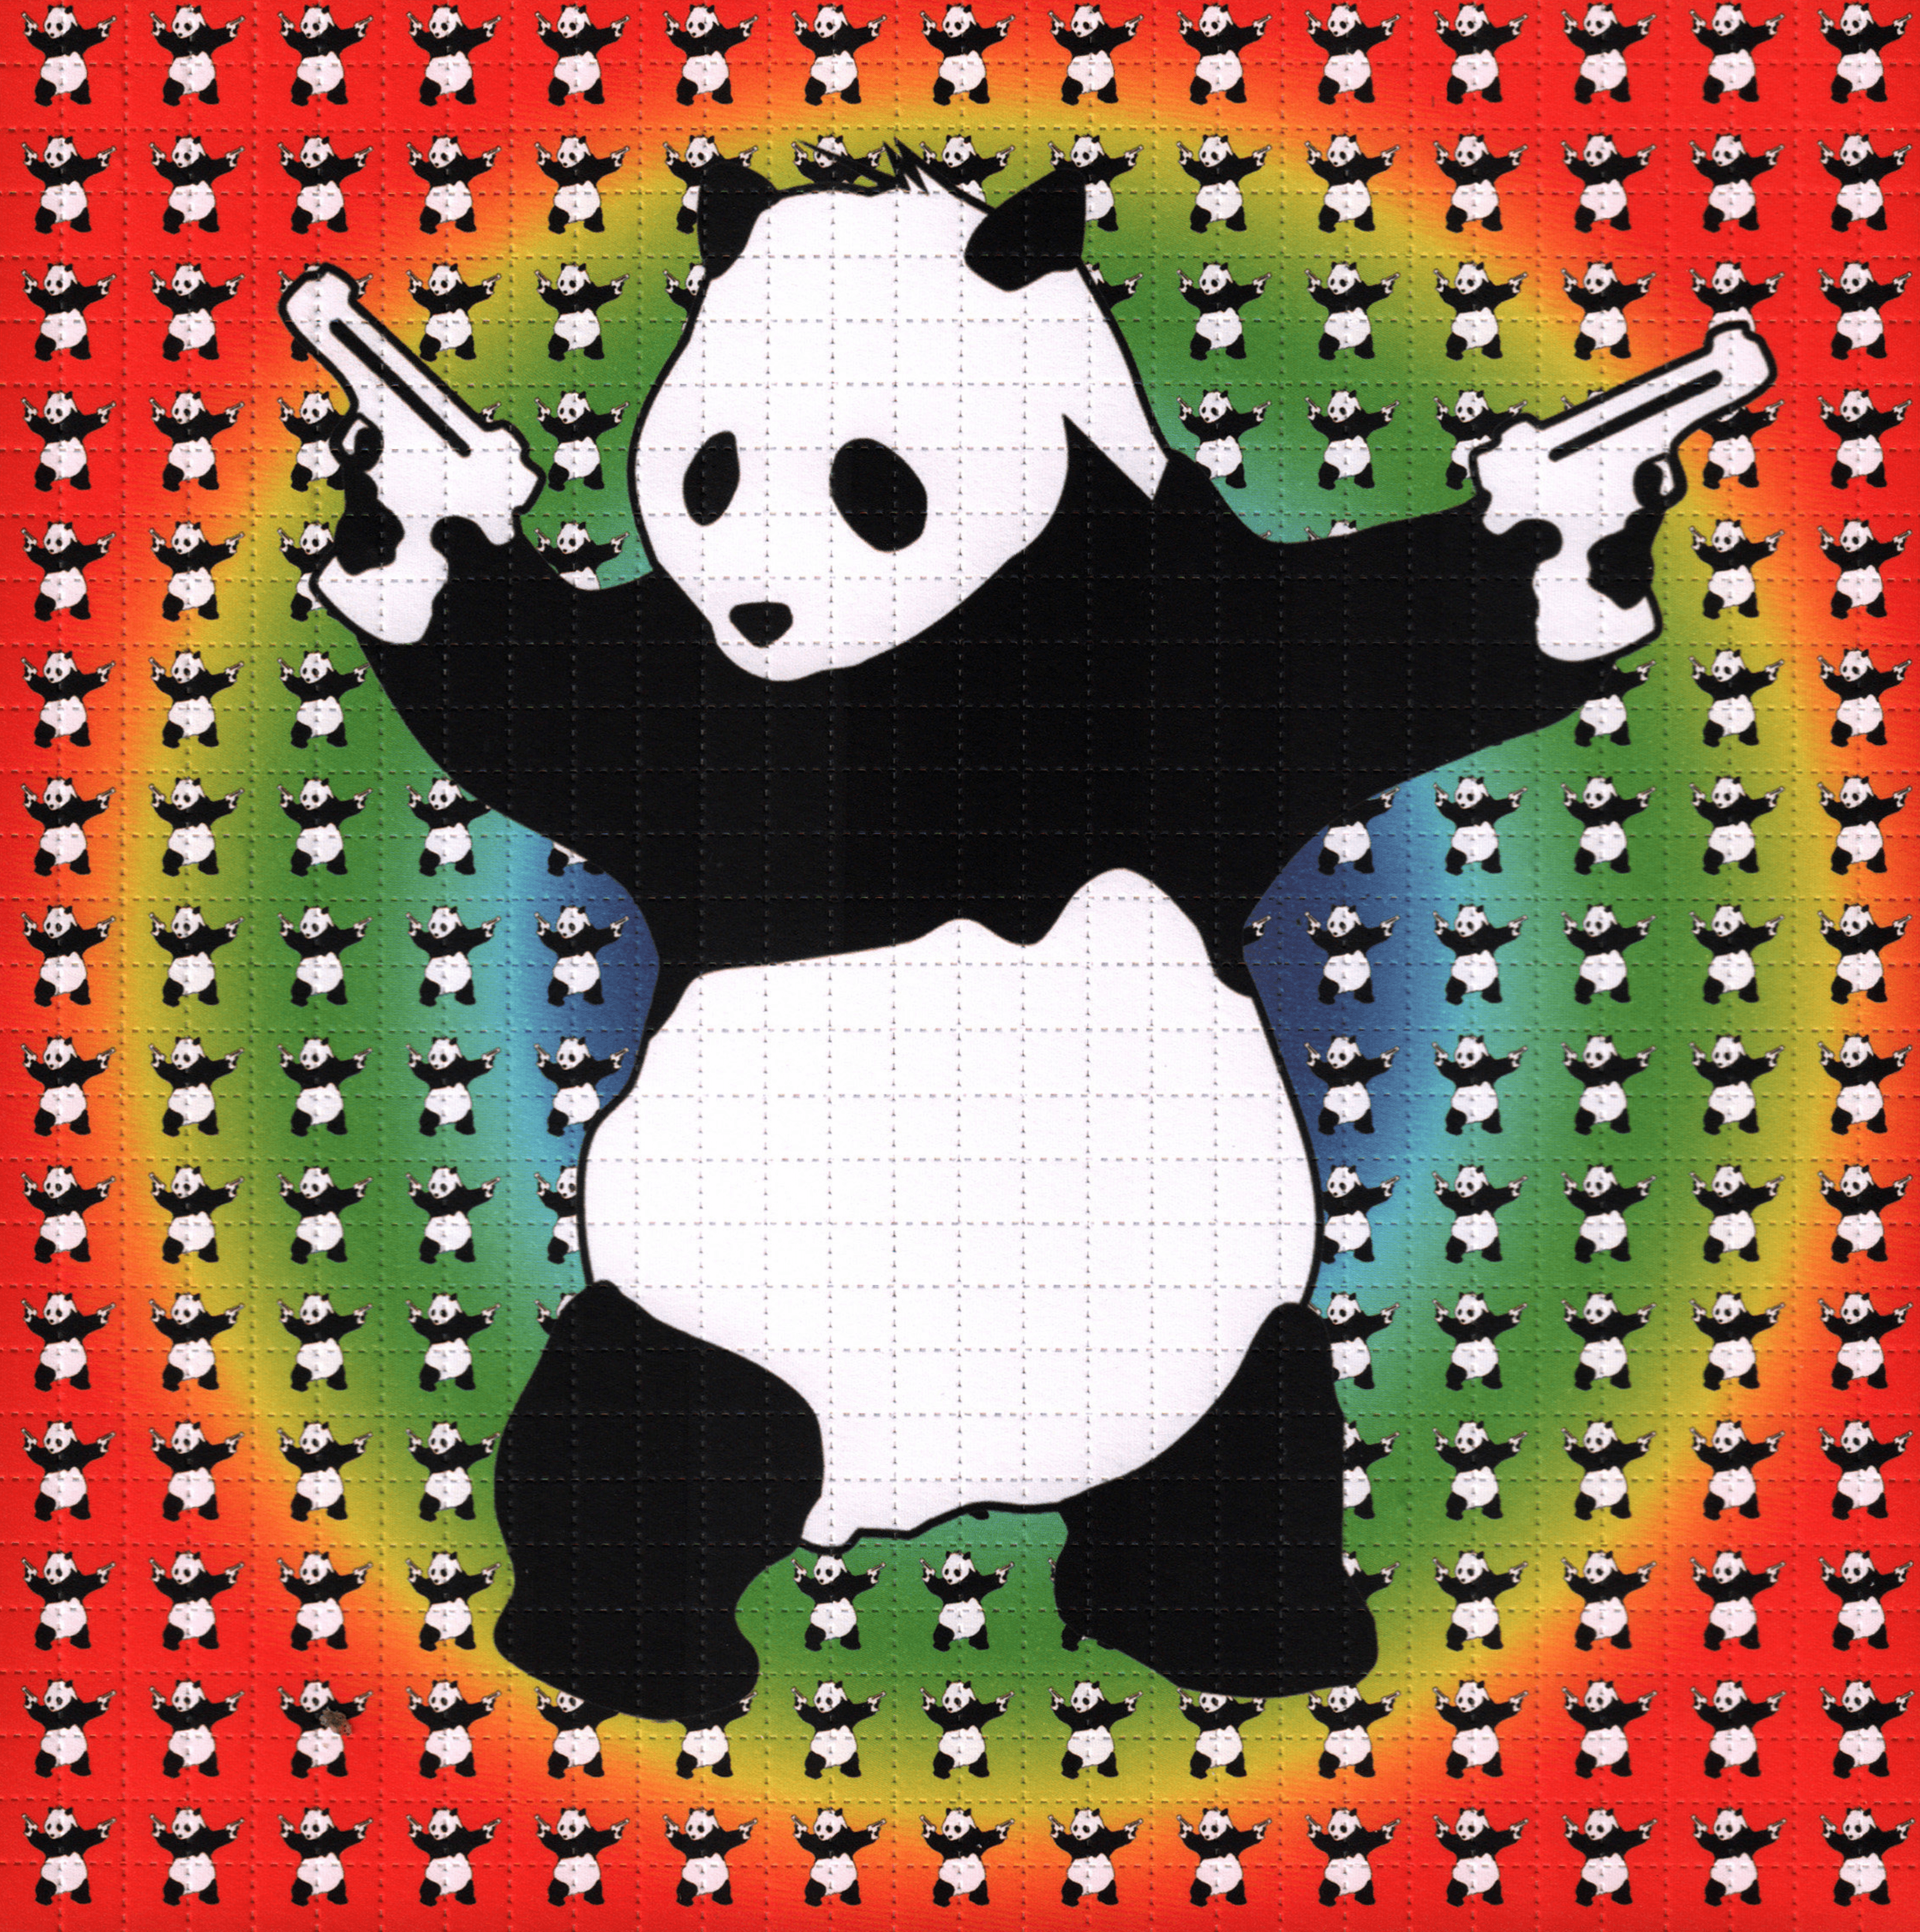 Psychedelic Panda LSD Sheet